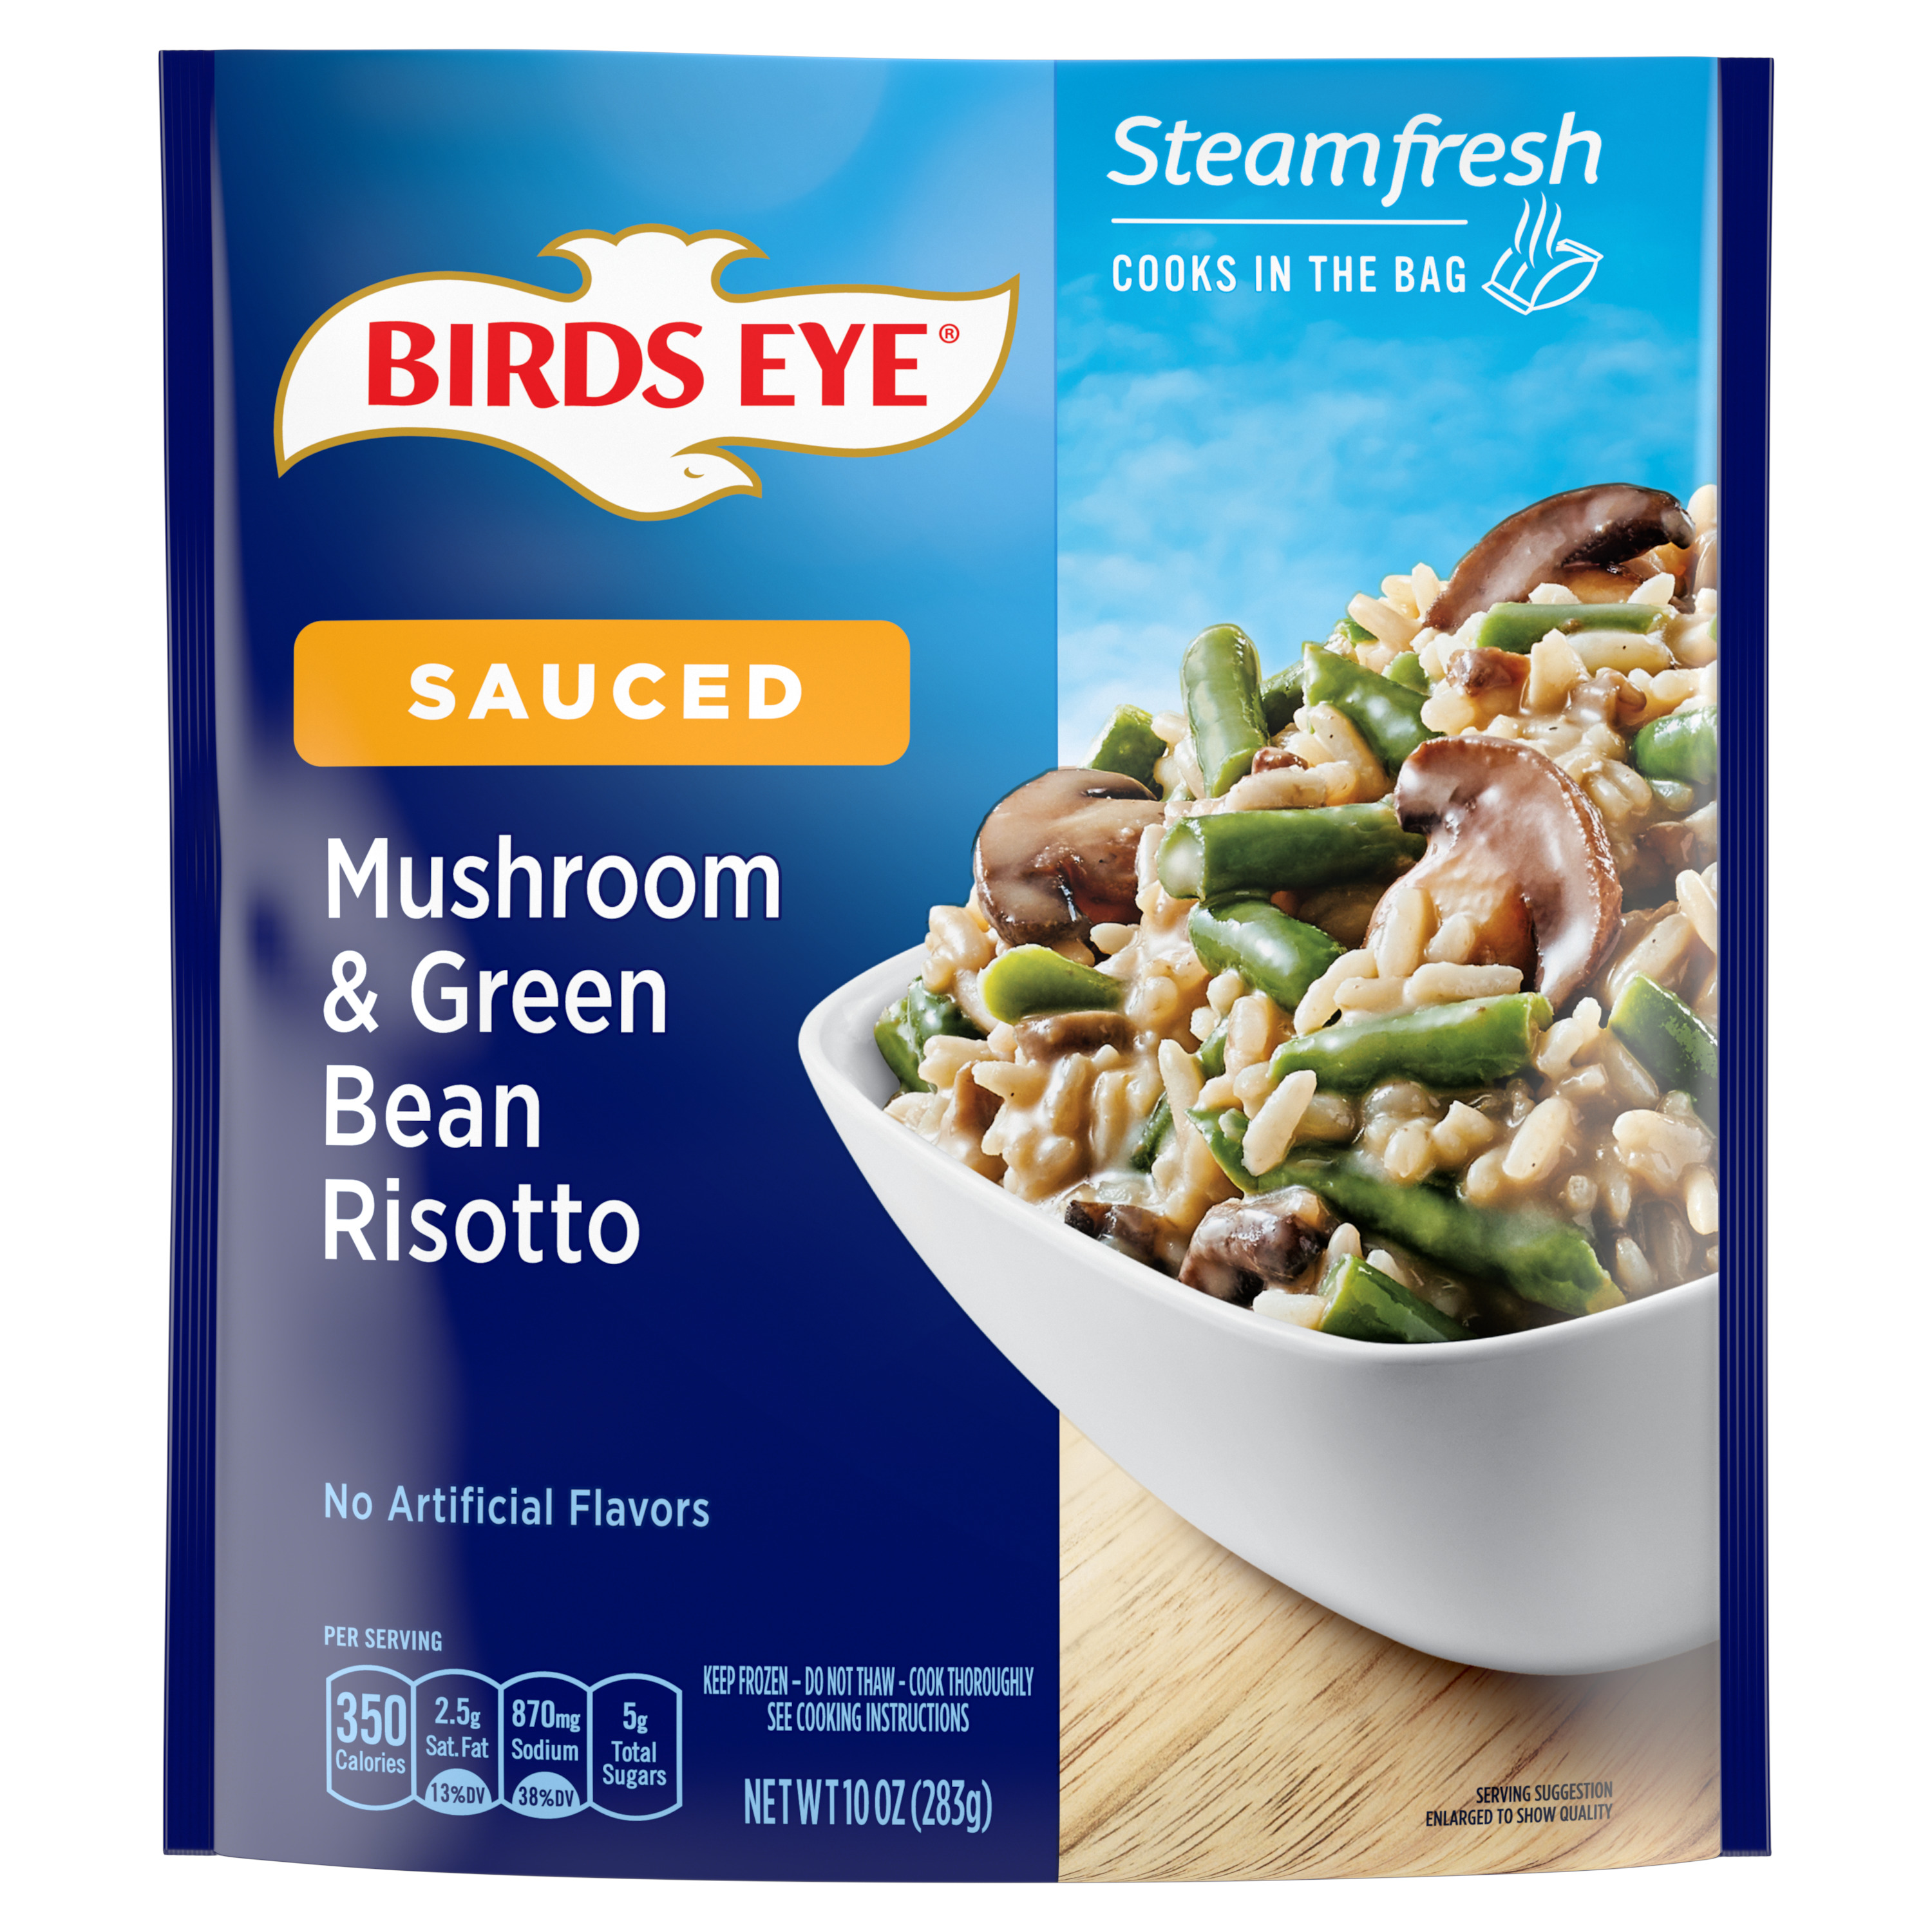 Birds Eye Steamfresh Chef’s Favorites Lightly Sauced Mushroom & Green Bean Risotto